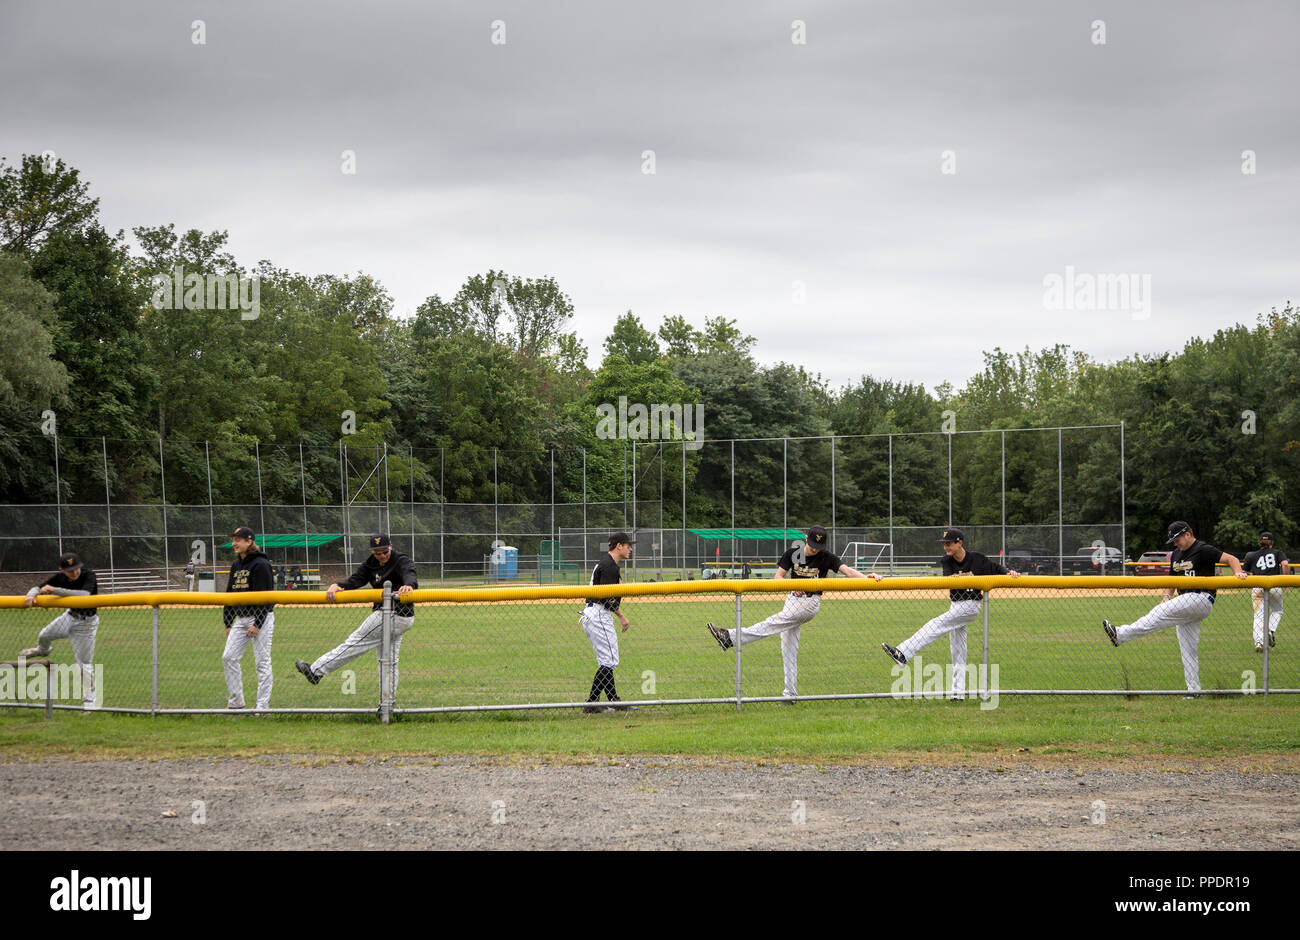 Teenage baseball players stretching before a ball game Stock Photo